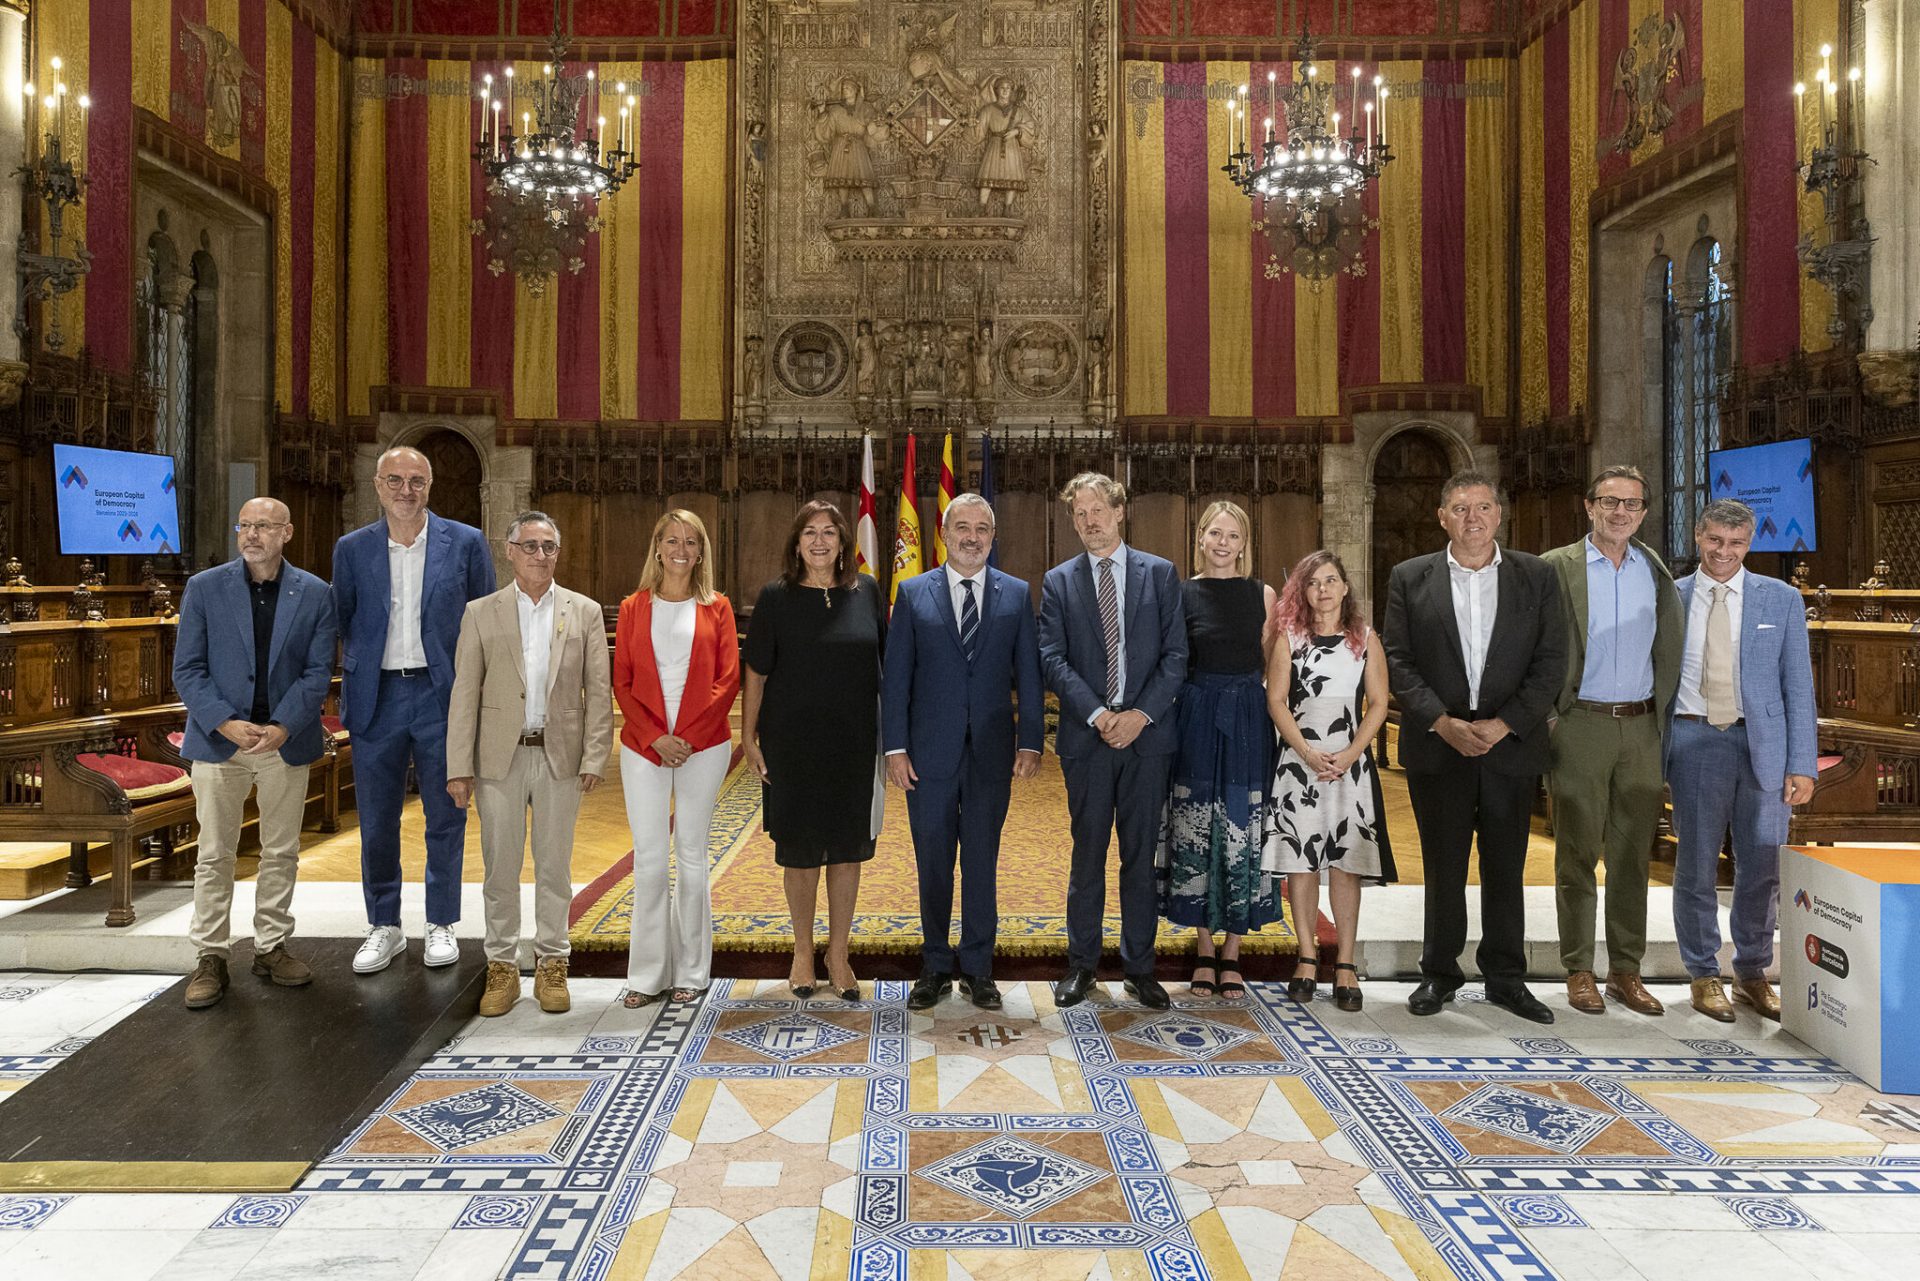 Family picture of the Future4Citizens presentation event in Barcelona